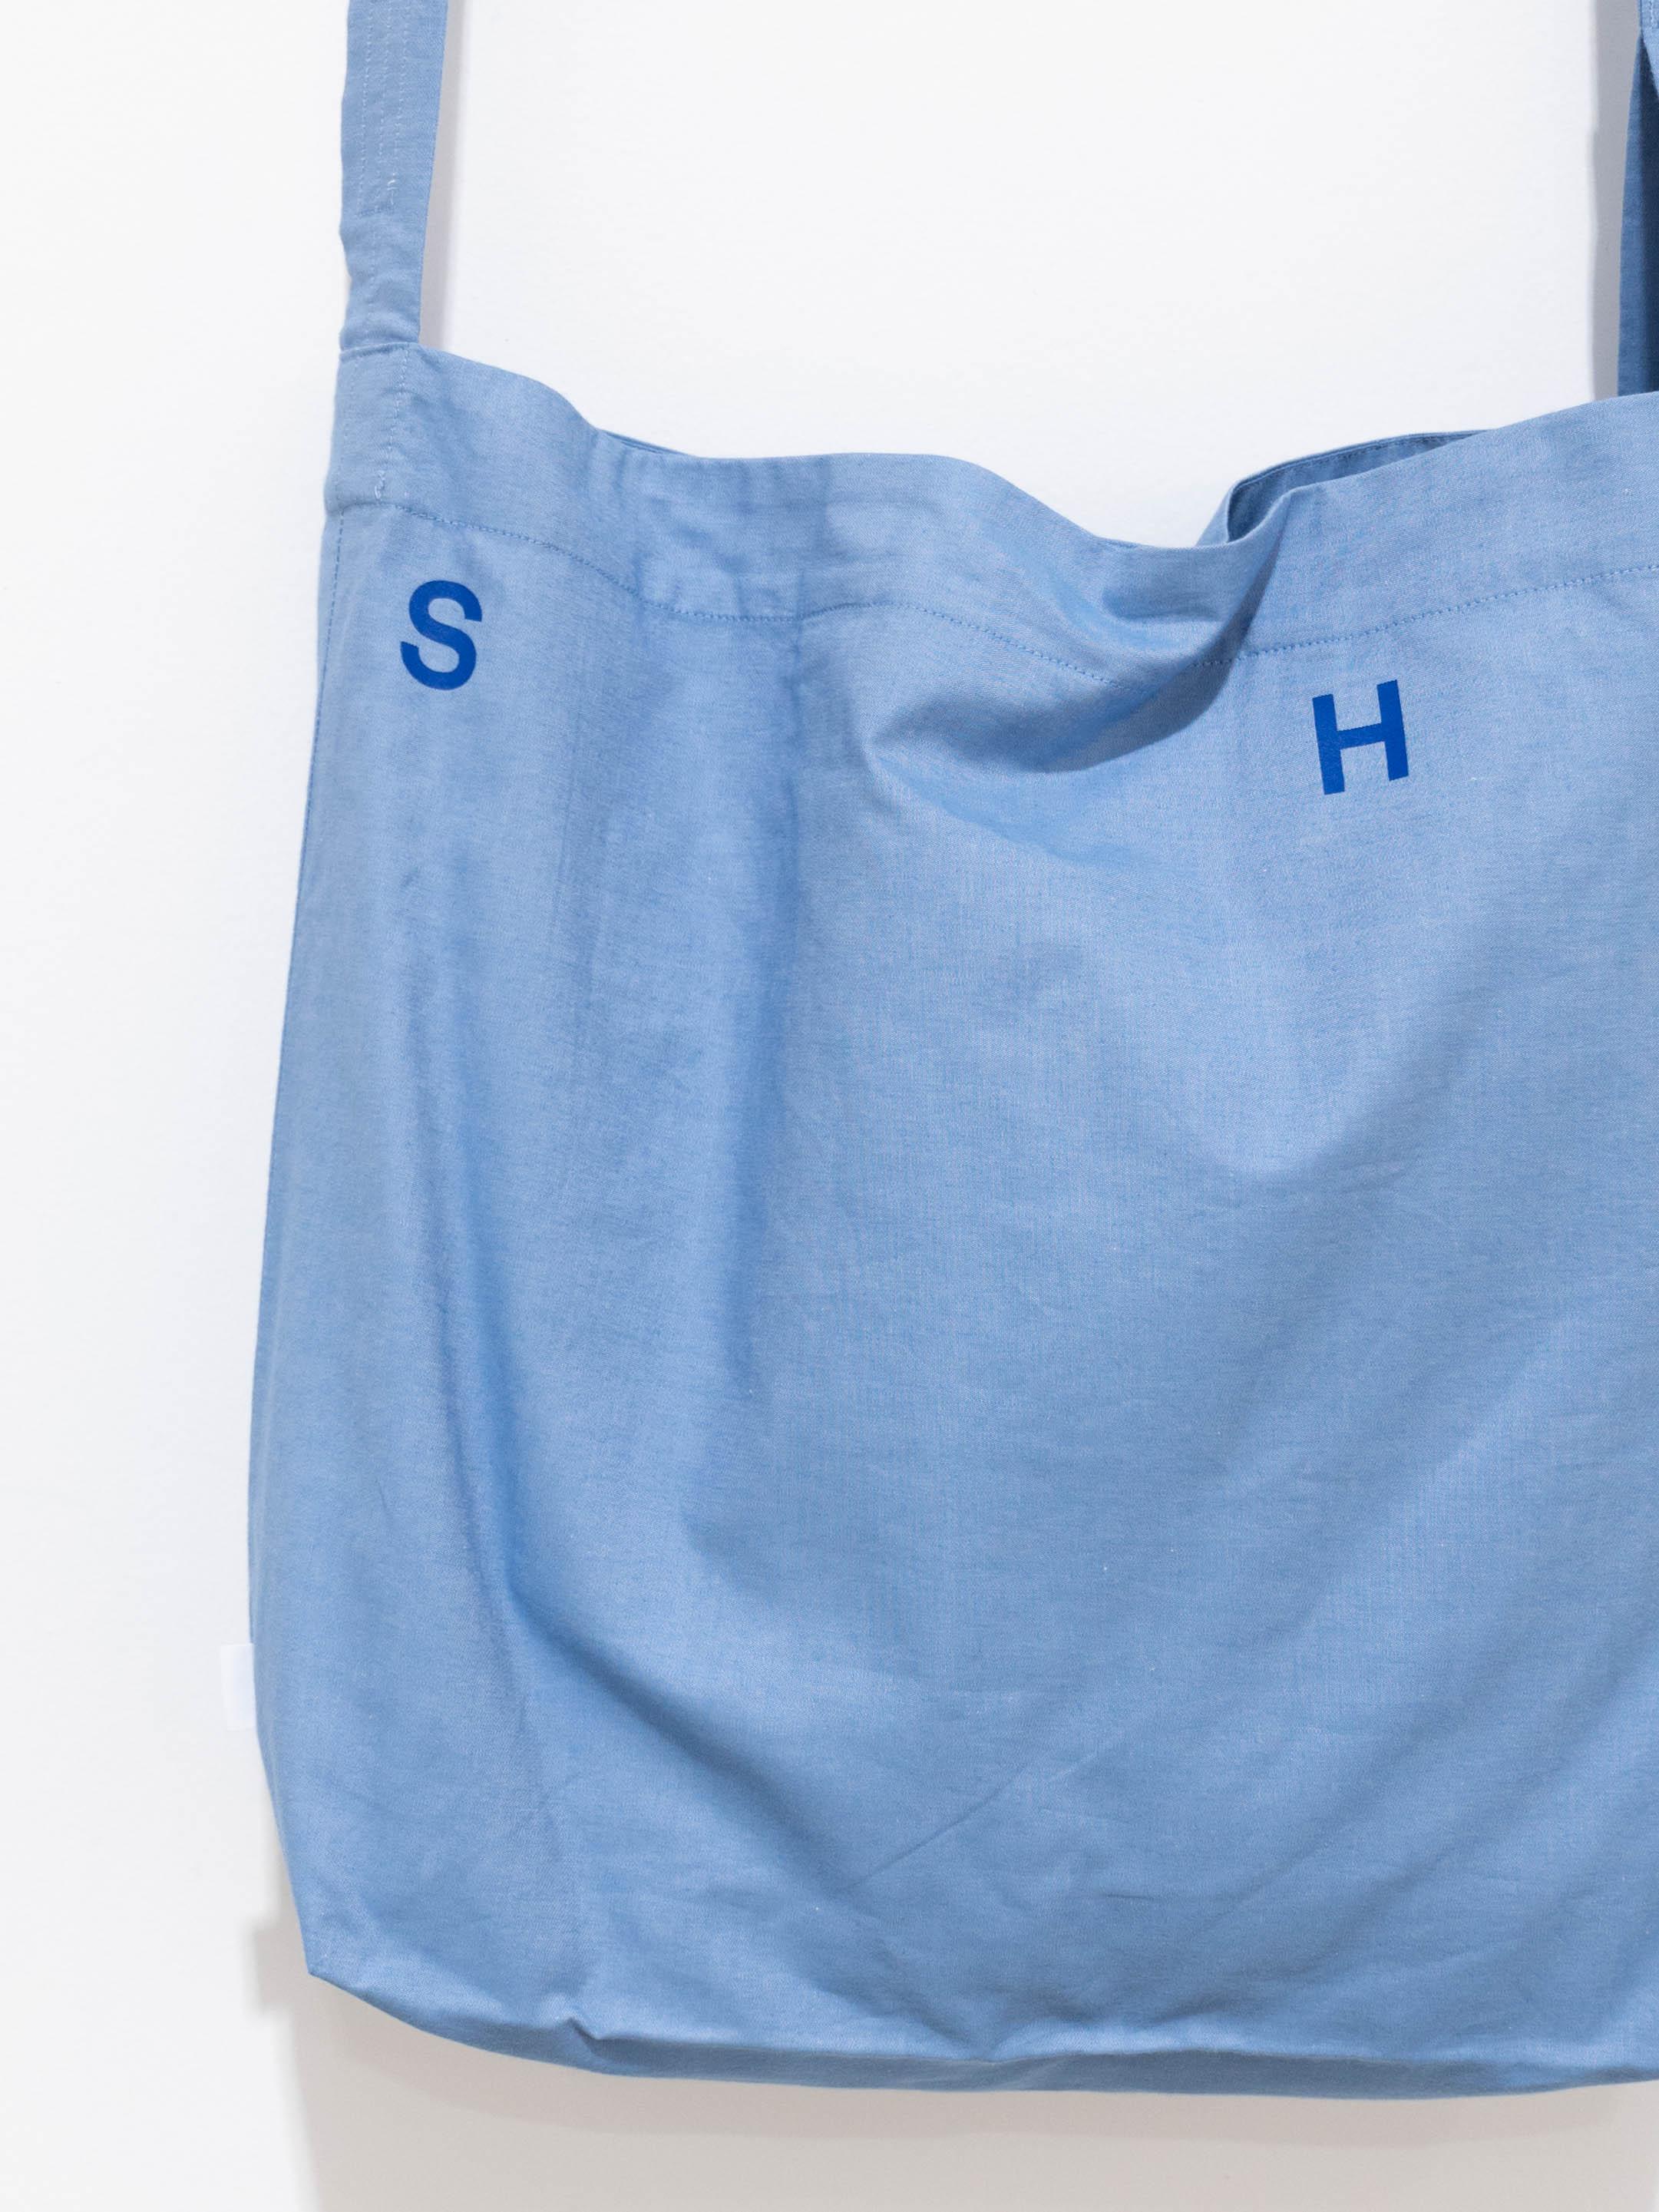 Namu Shop - S H ERA for S H Tote Bag - 3 Colors